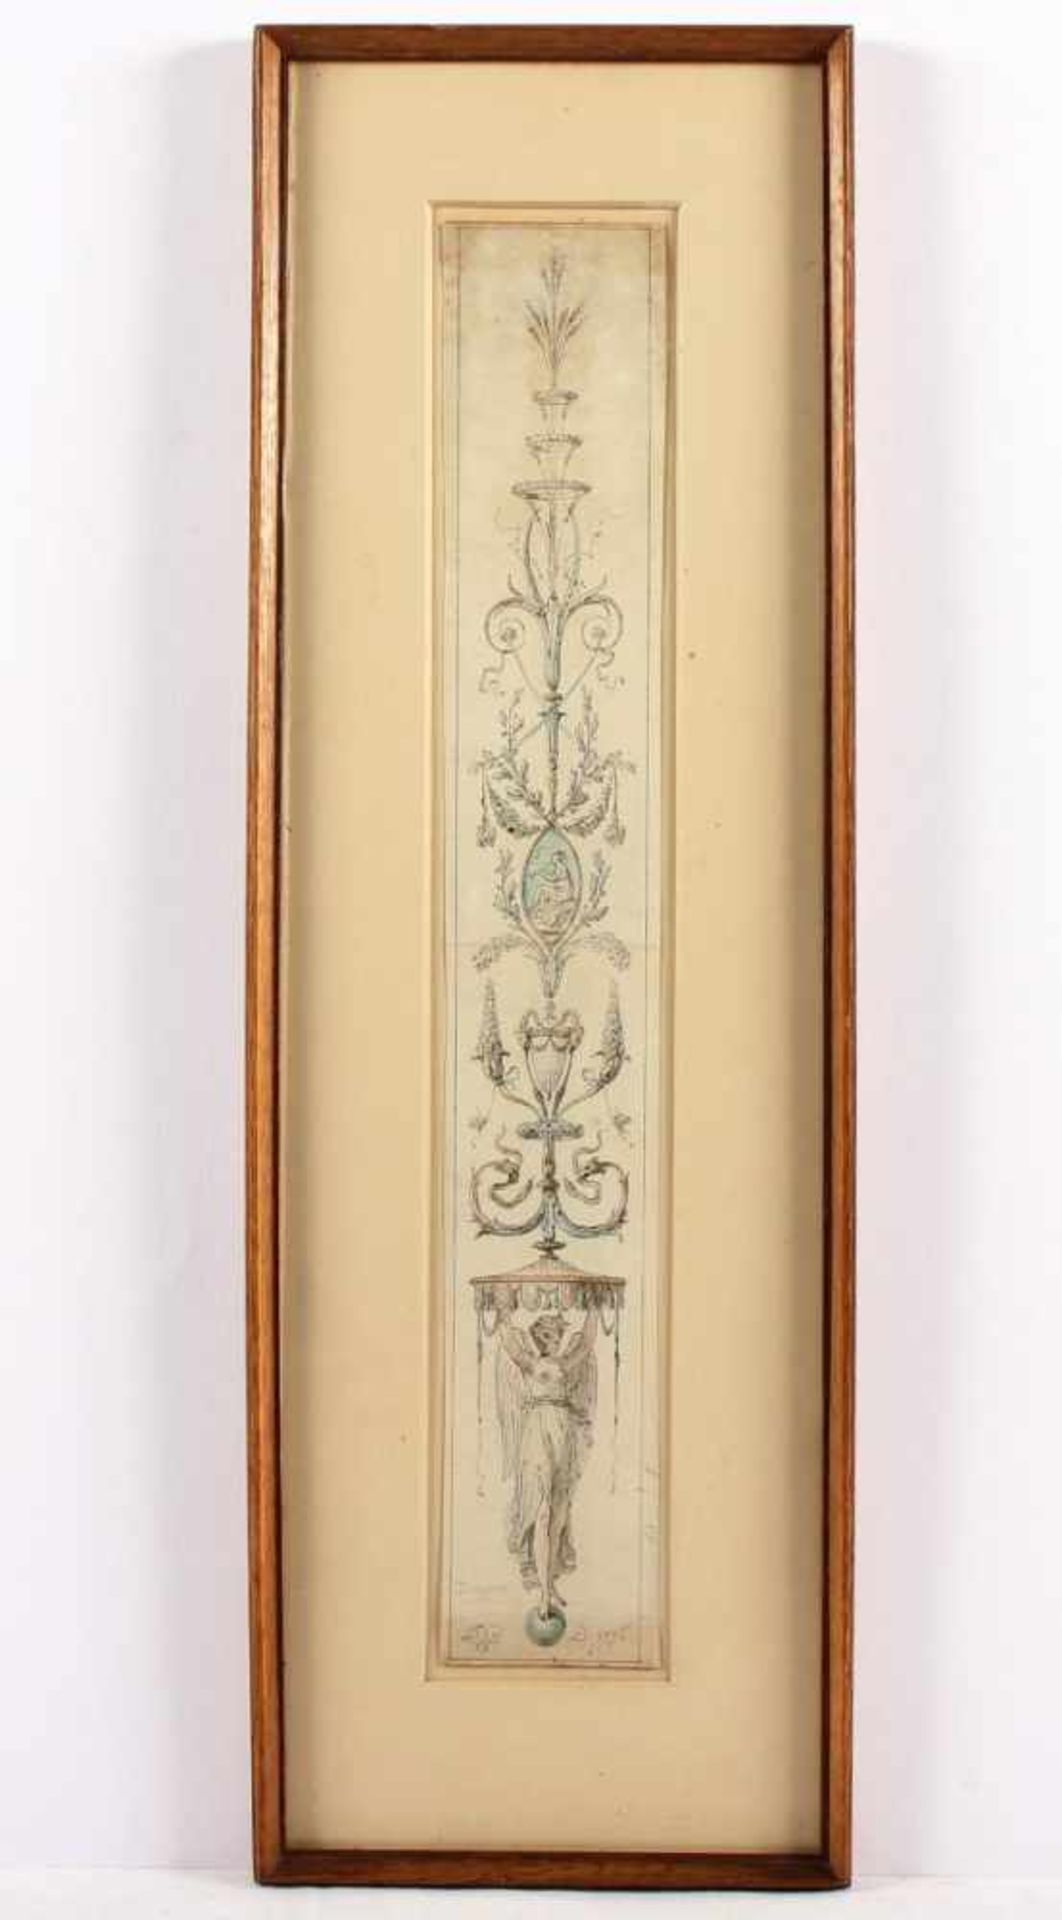 DUGOURC, J.D., "Ornament", Kupferstich, 41 x 5,5, 1776, R.